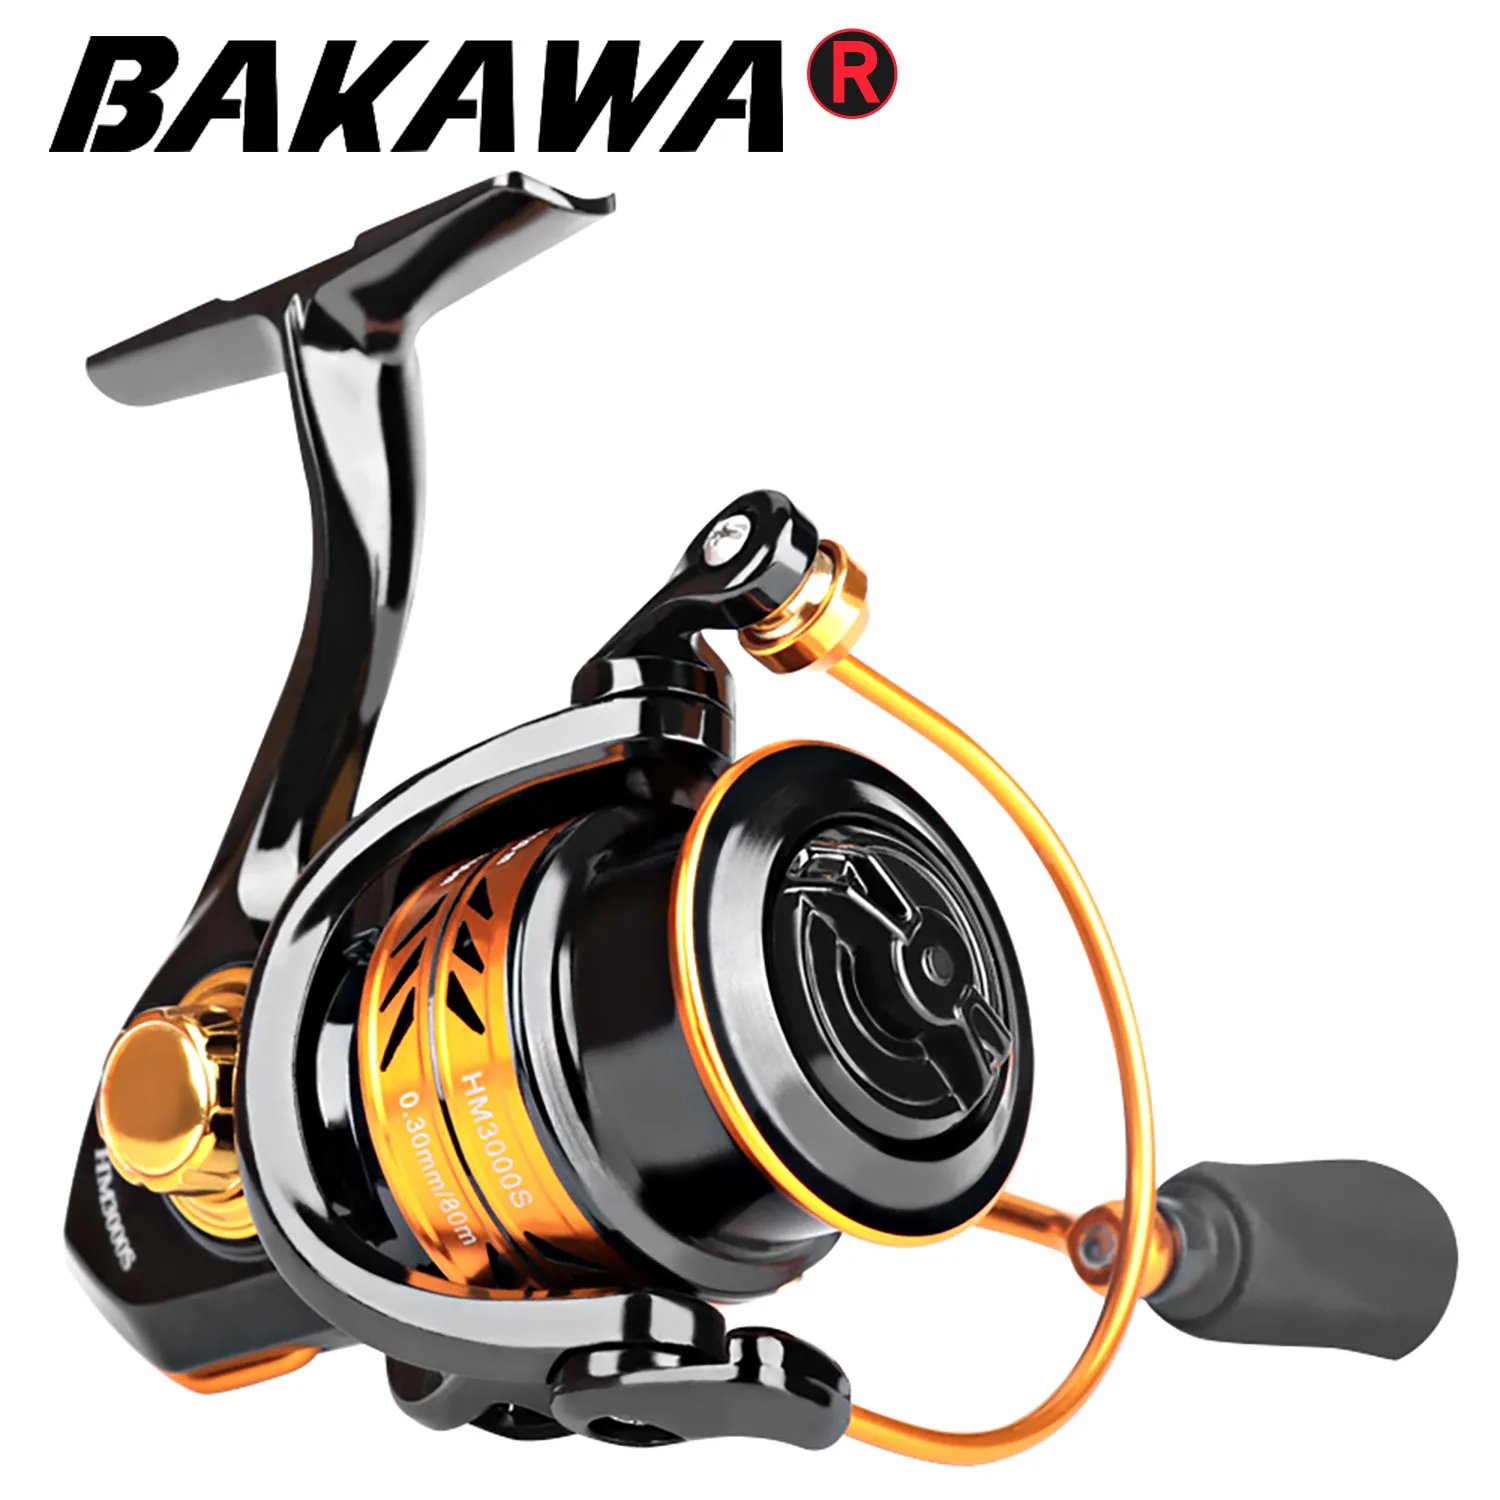 

BAKAWA Spinning Reel 5.0:1 Ratio Speed Max Drag System Saltwater Freshwater Wheel 2000-3000 Shallow Cup Long Shot Ultra Light